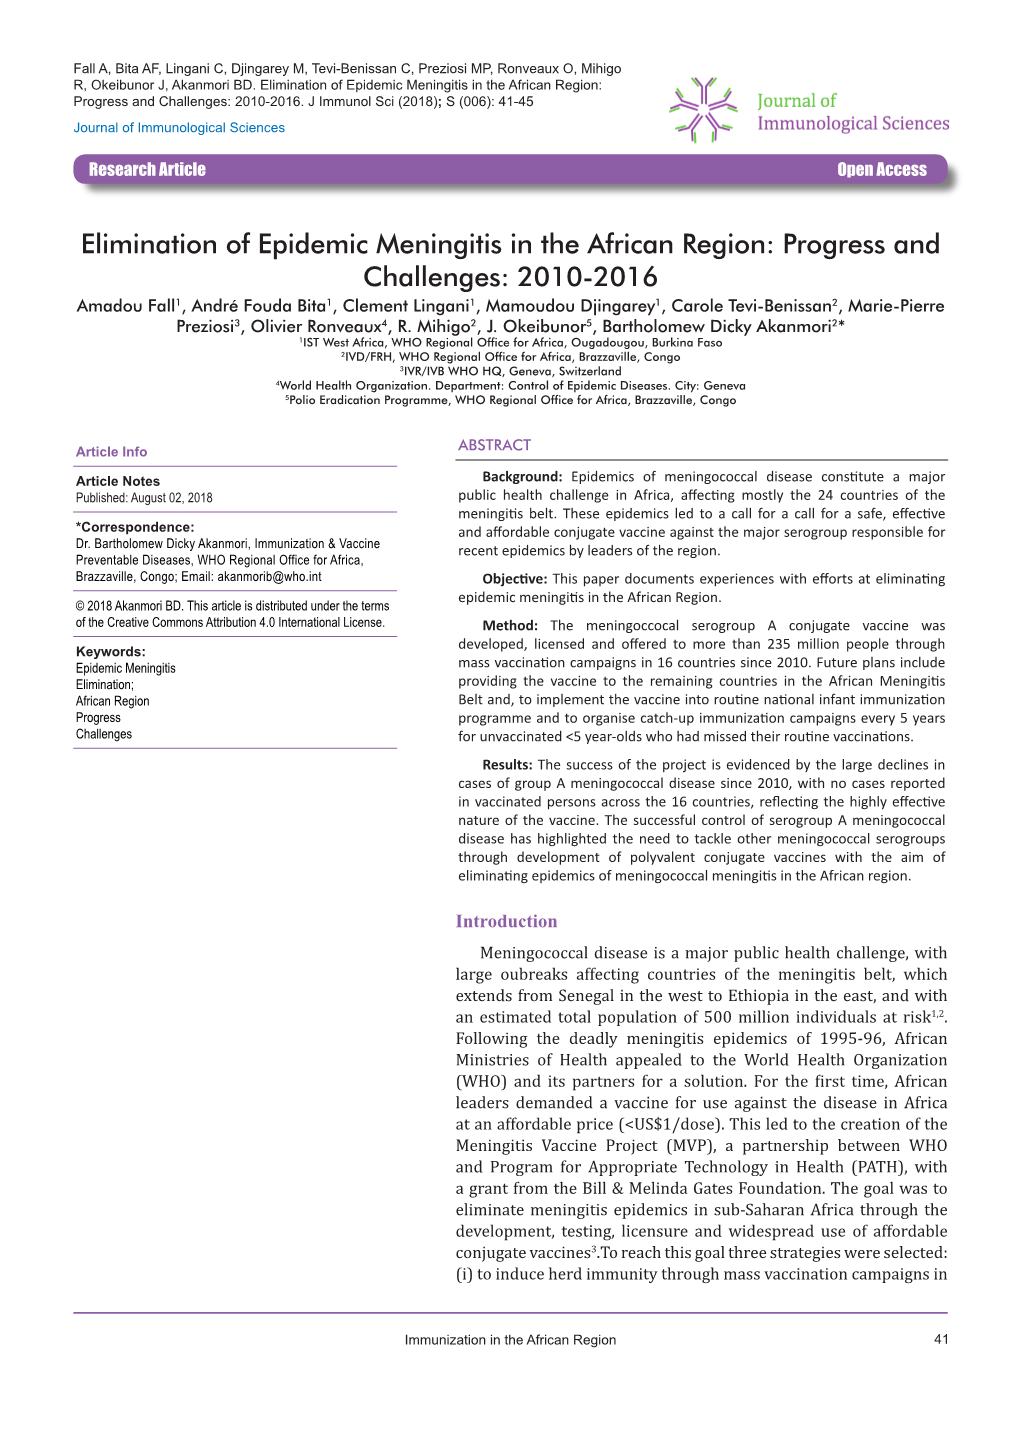 Elimination of Epidemic Meningitis in the African Region: Progress and Challenges: 2010-2016